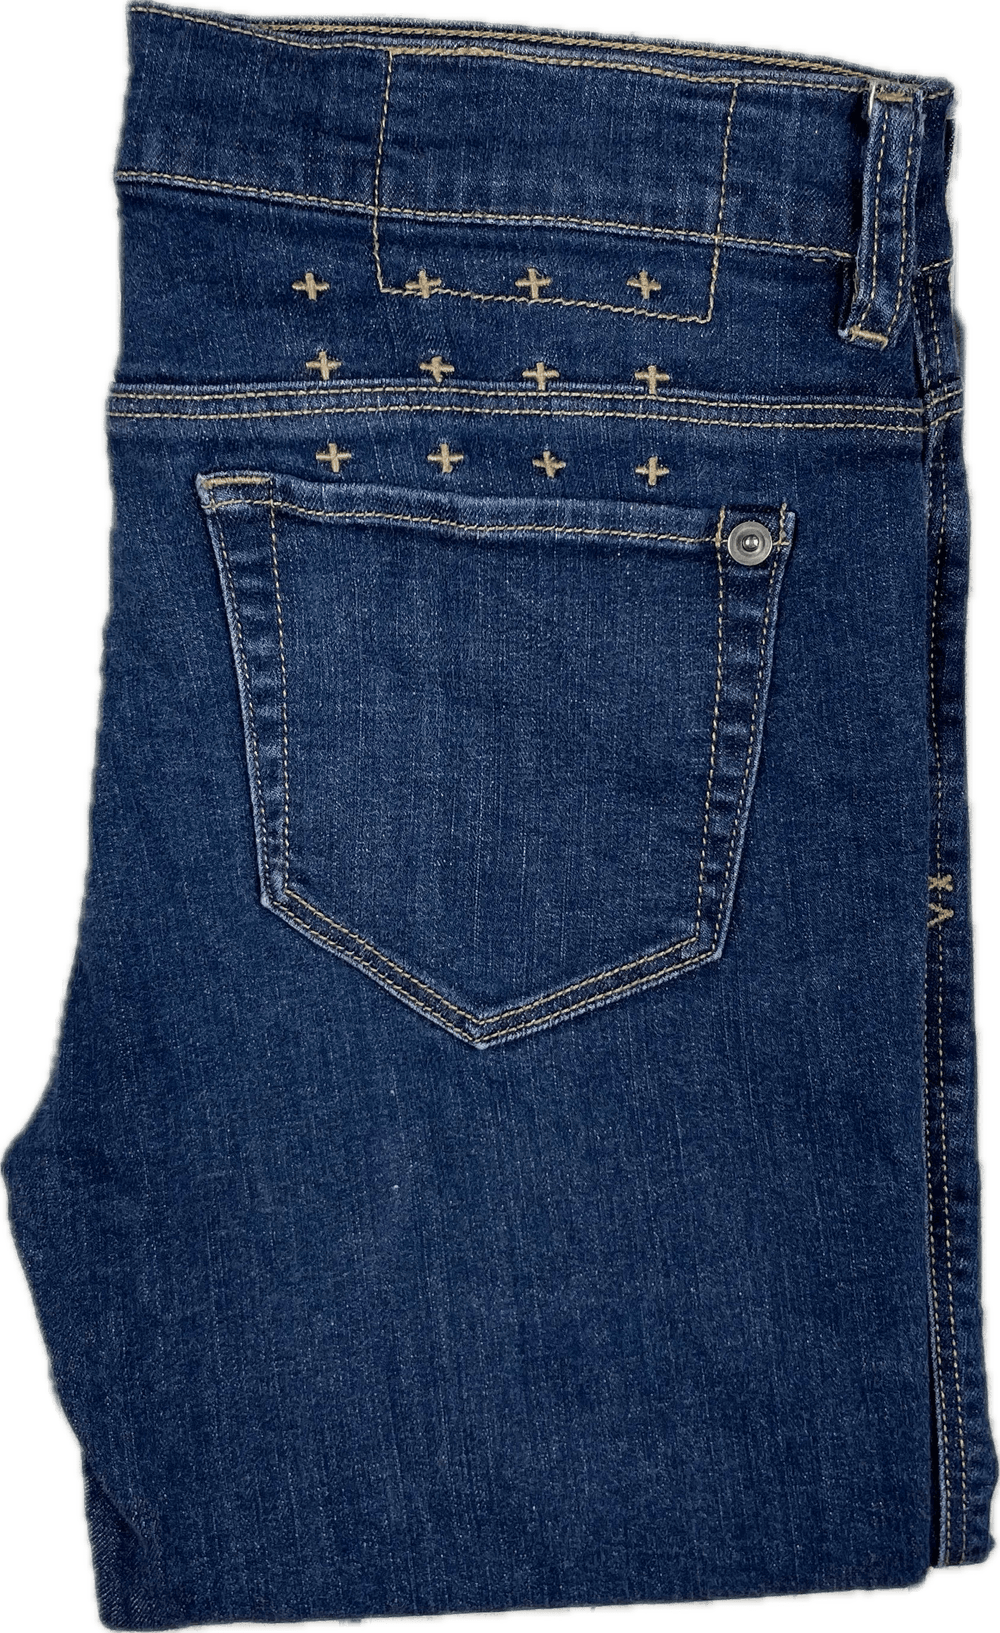 Tsubi 'Super Skinny' Jeans in Tight Arse Indigo Wash - Size 26 - Jean Pool